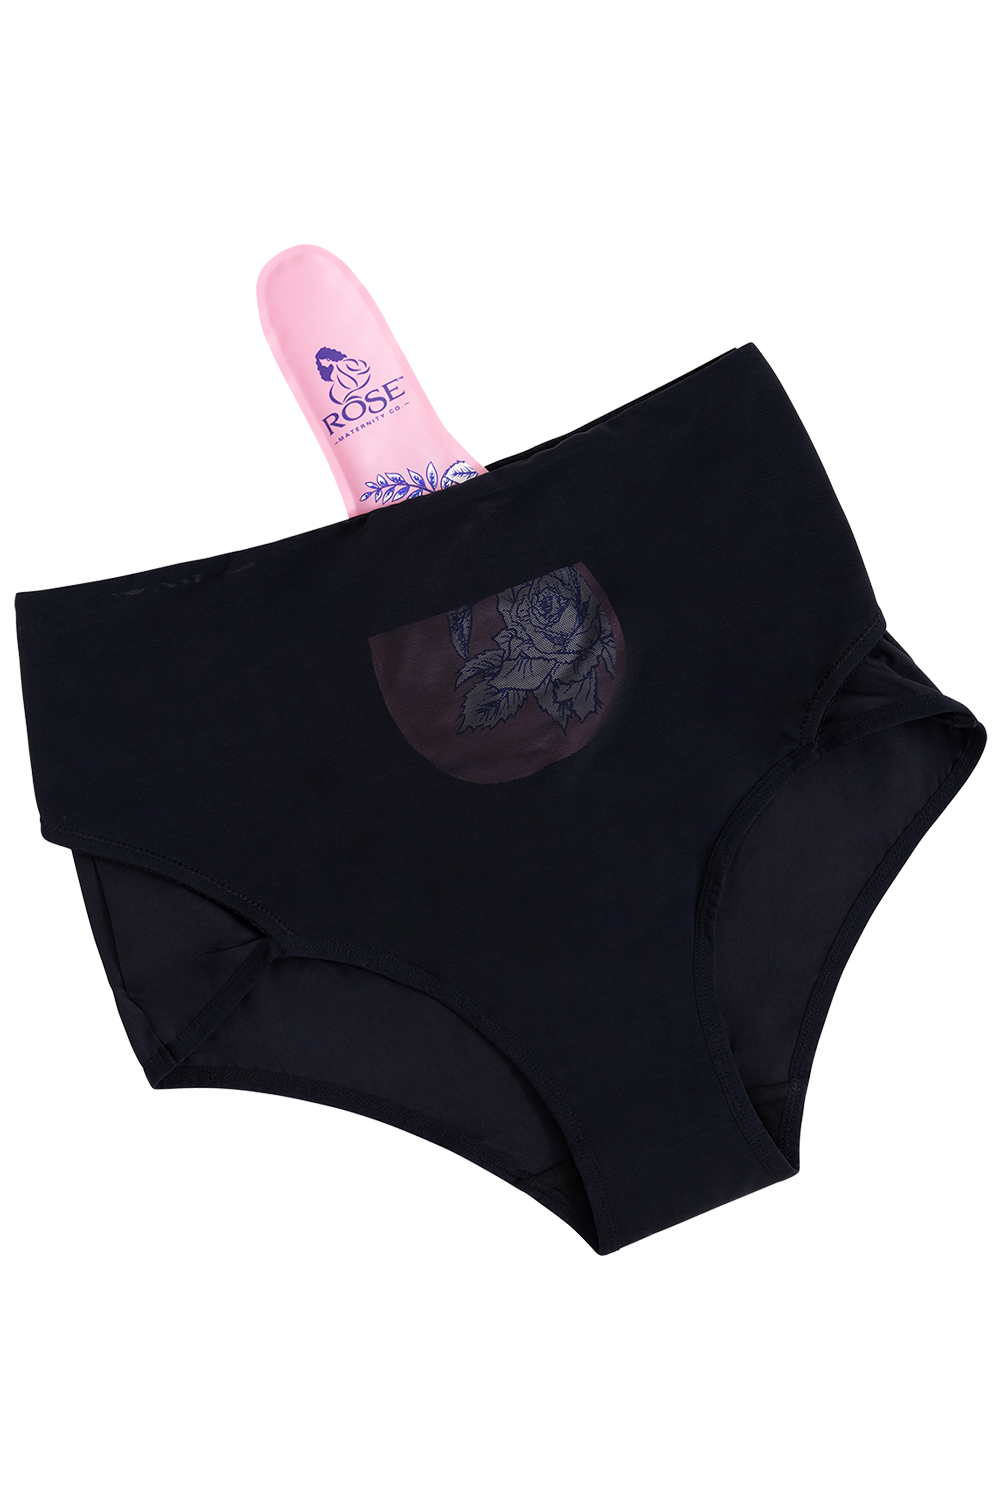 Postnatal Bandage. Medical Compression Underwear. Orthopedic Bandage  Underpants for Lowering of the Pelvic Organs Stock Image - Image of panties,  body: 175887027